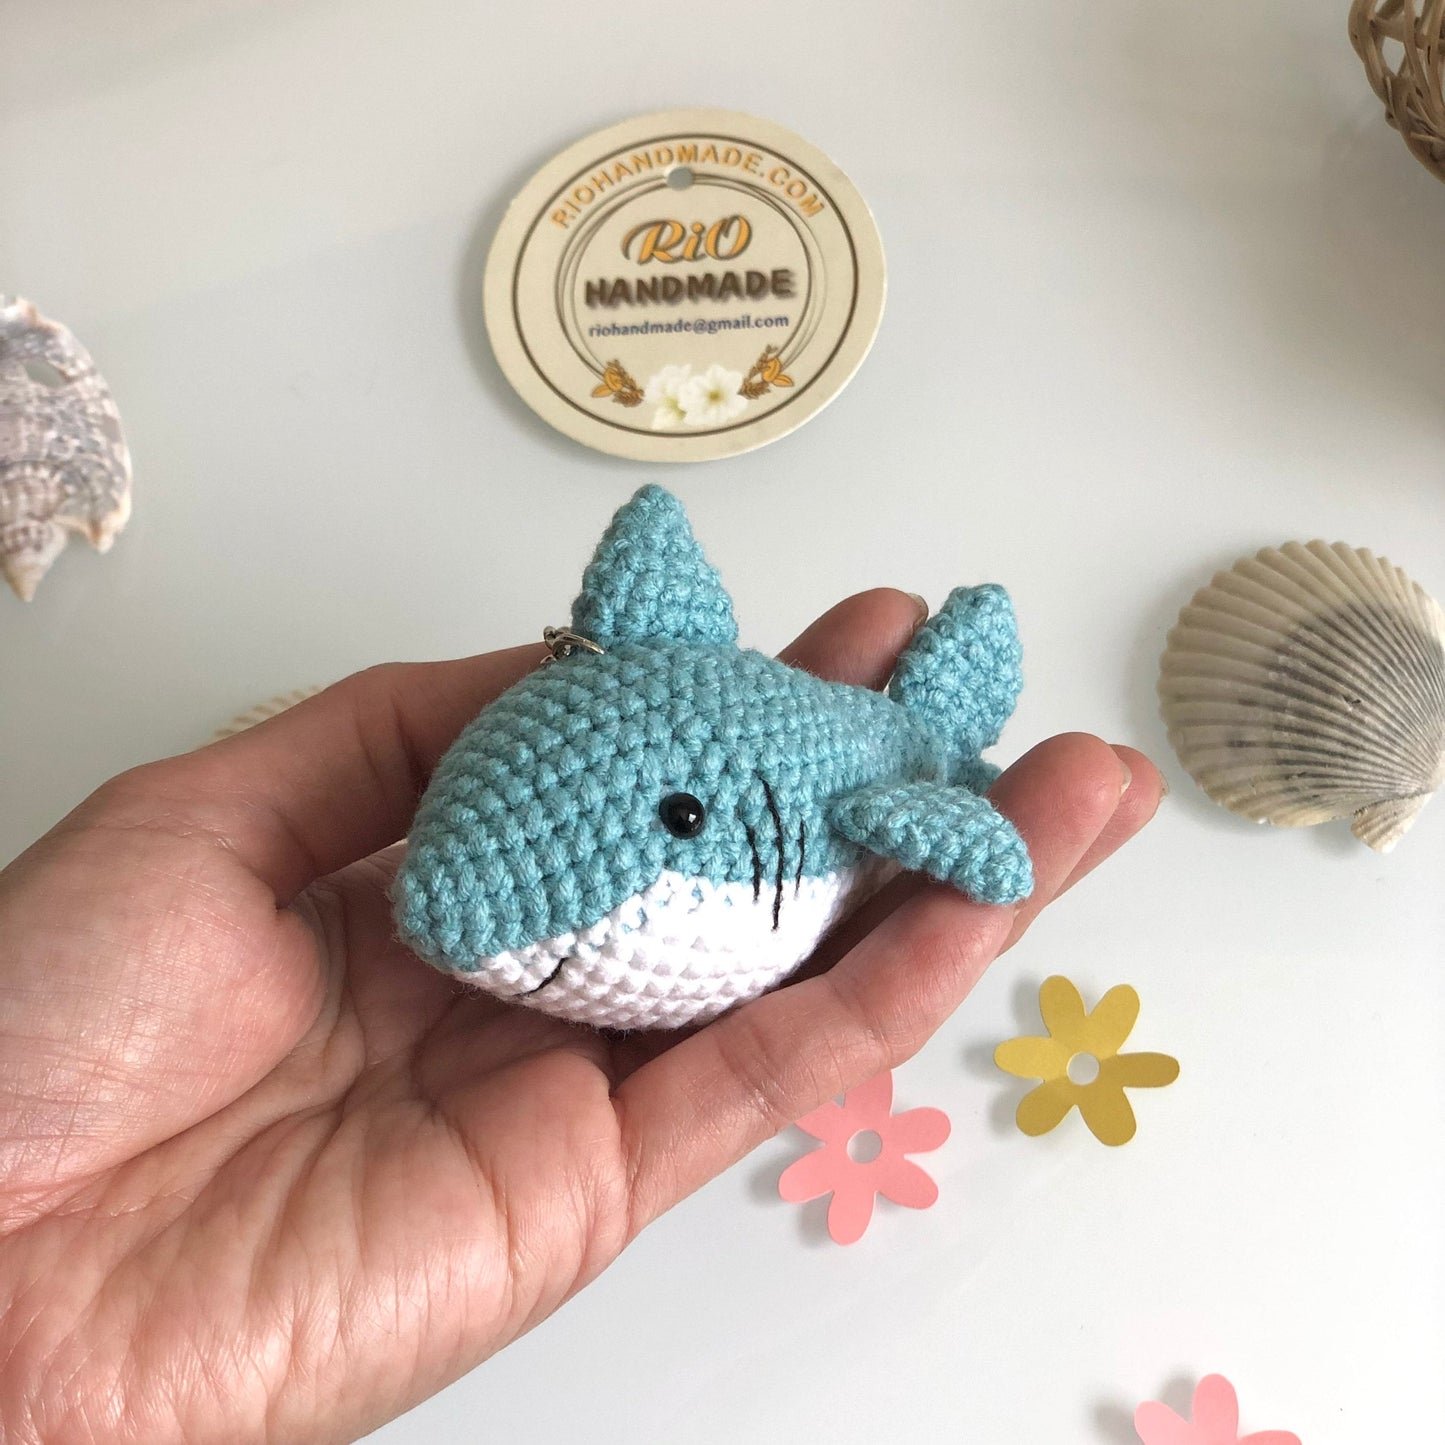 Handmade Shark crochet keychain, pom bag charm, car rear view hanging mirrior, amigurumi, cute gift.